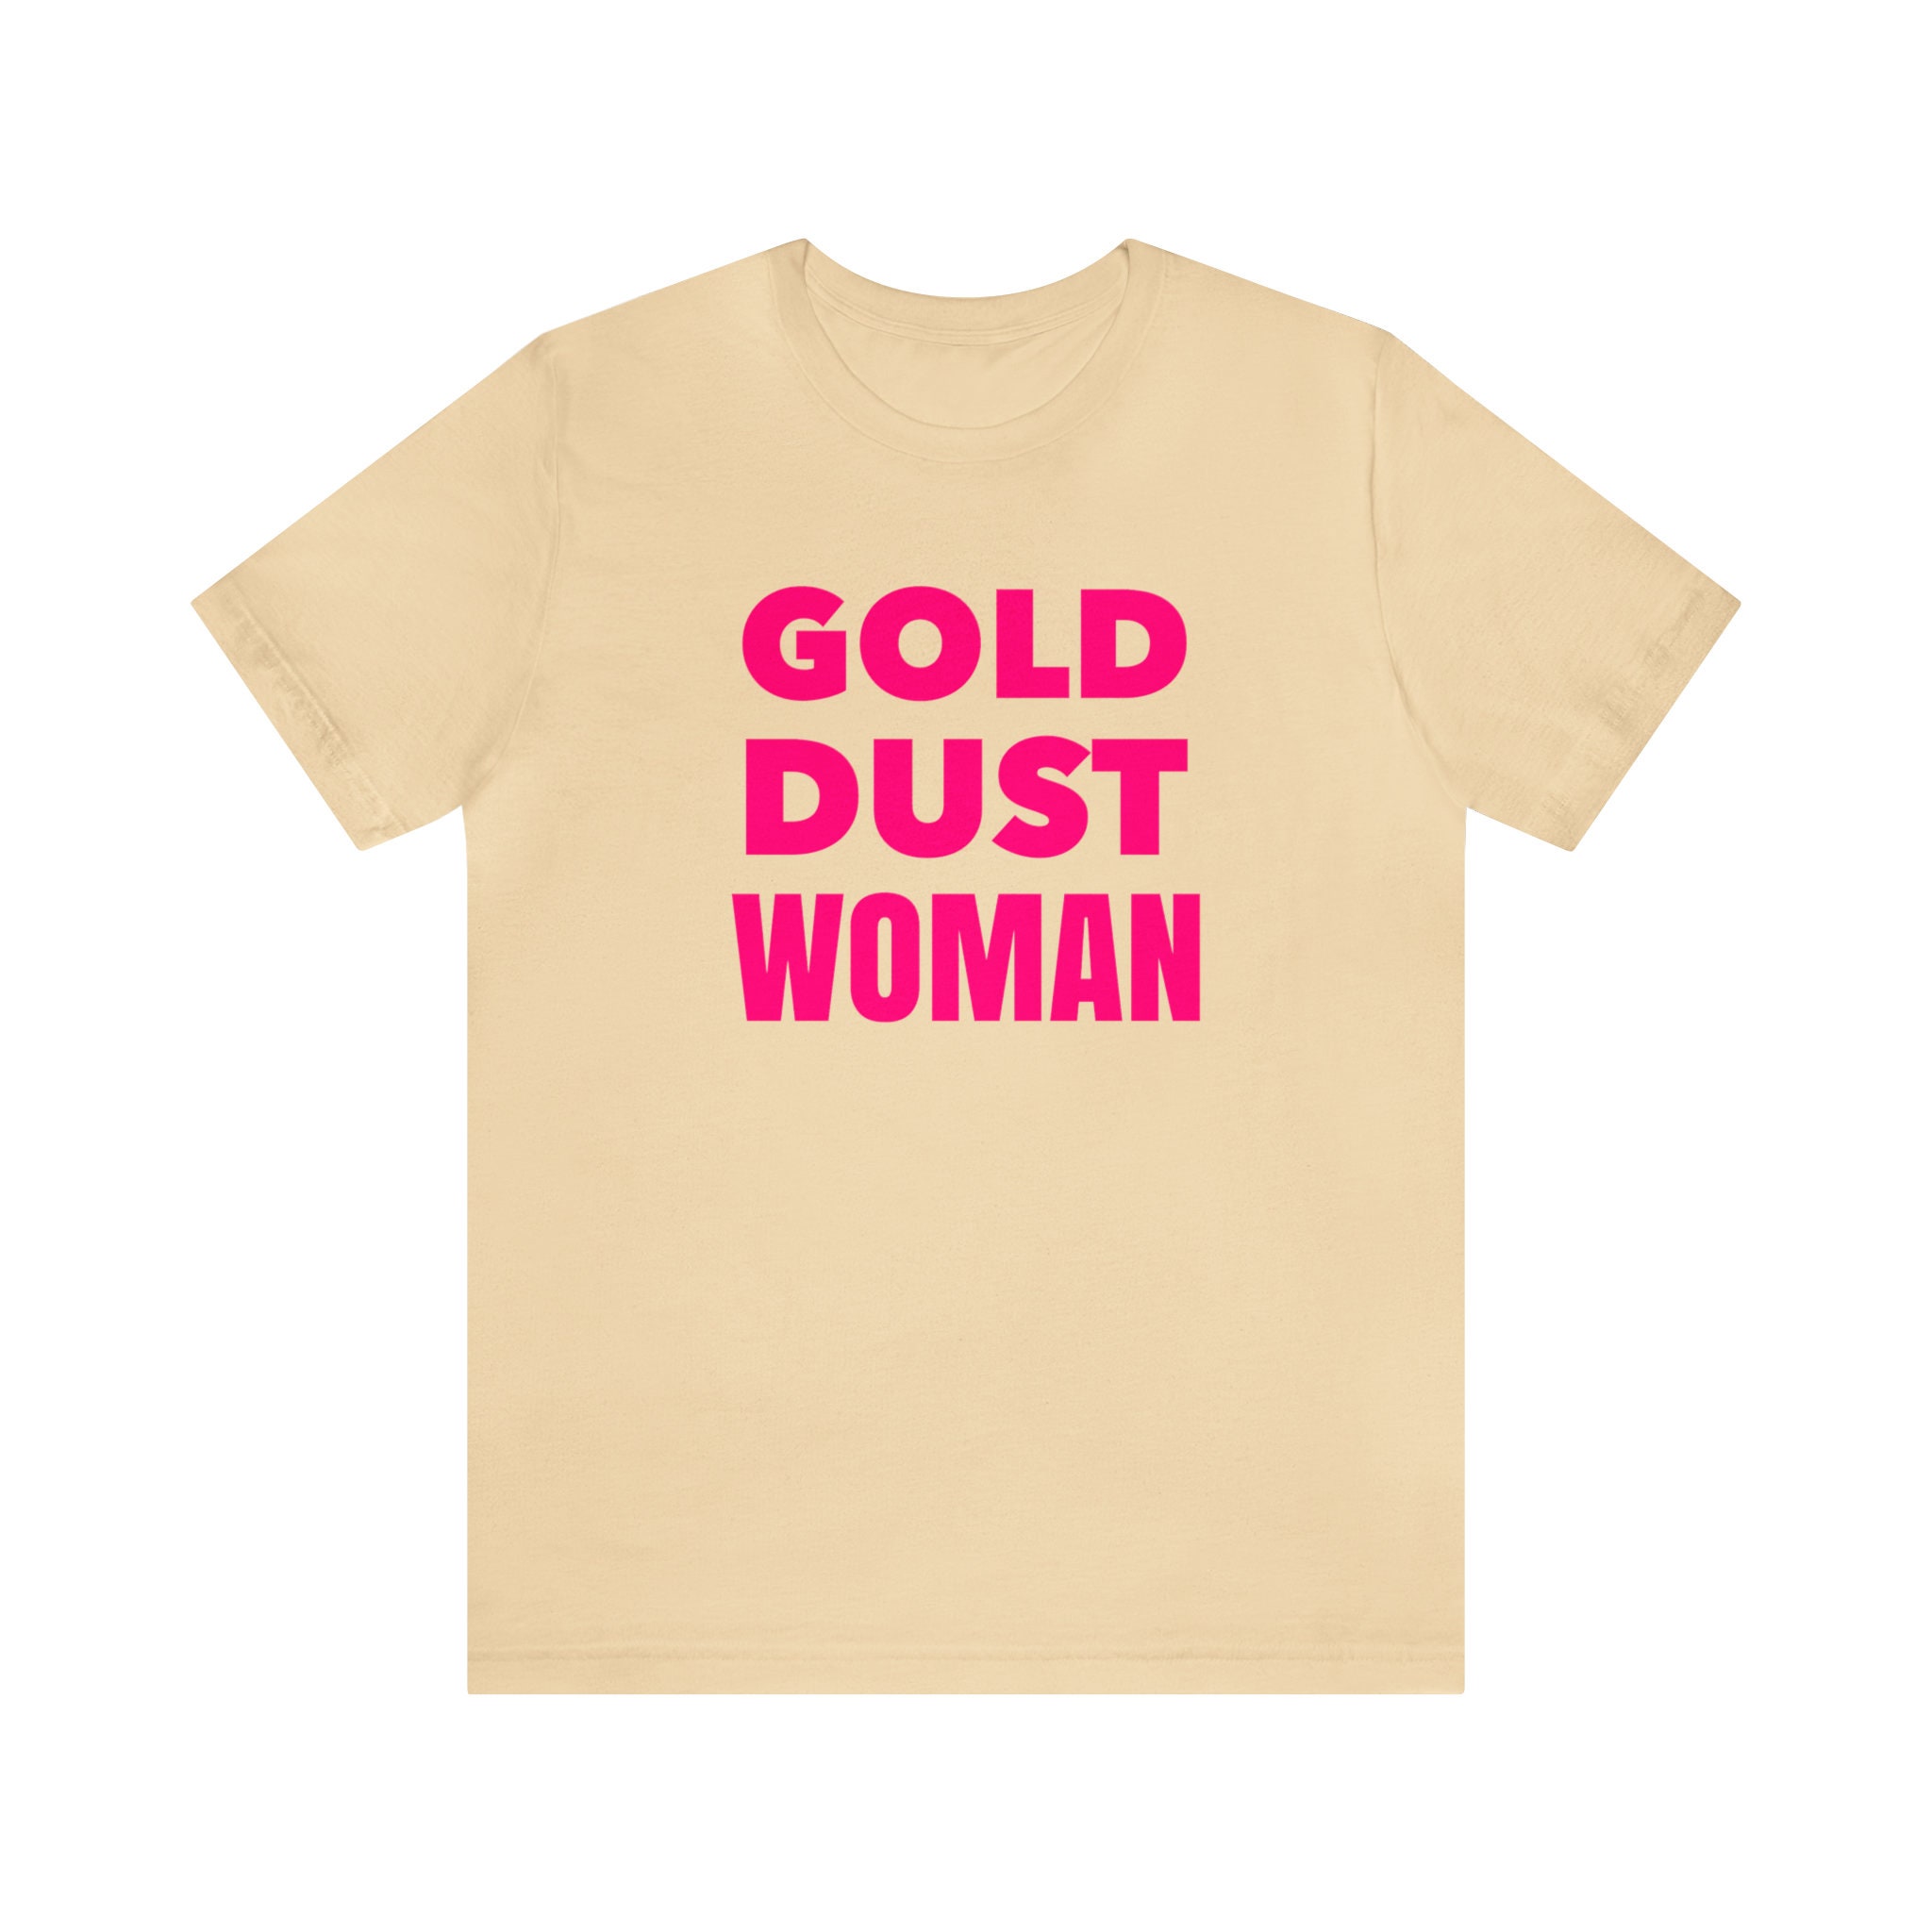 Stevie Nicks - GOLD DUST WOMAN - Lyrics Men's T-Shirt